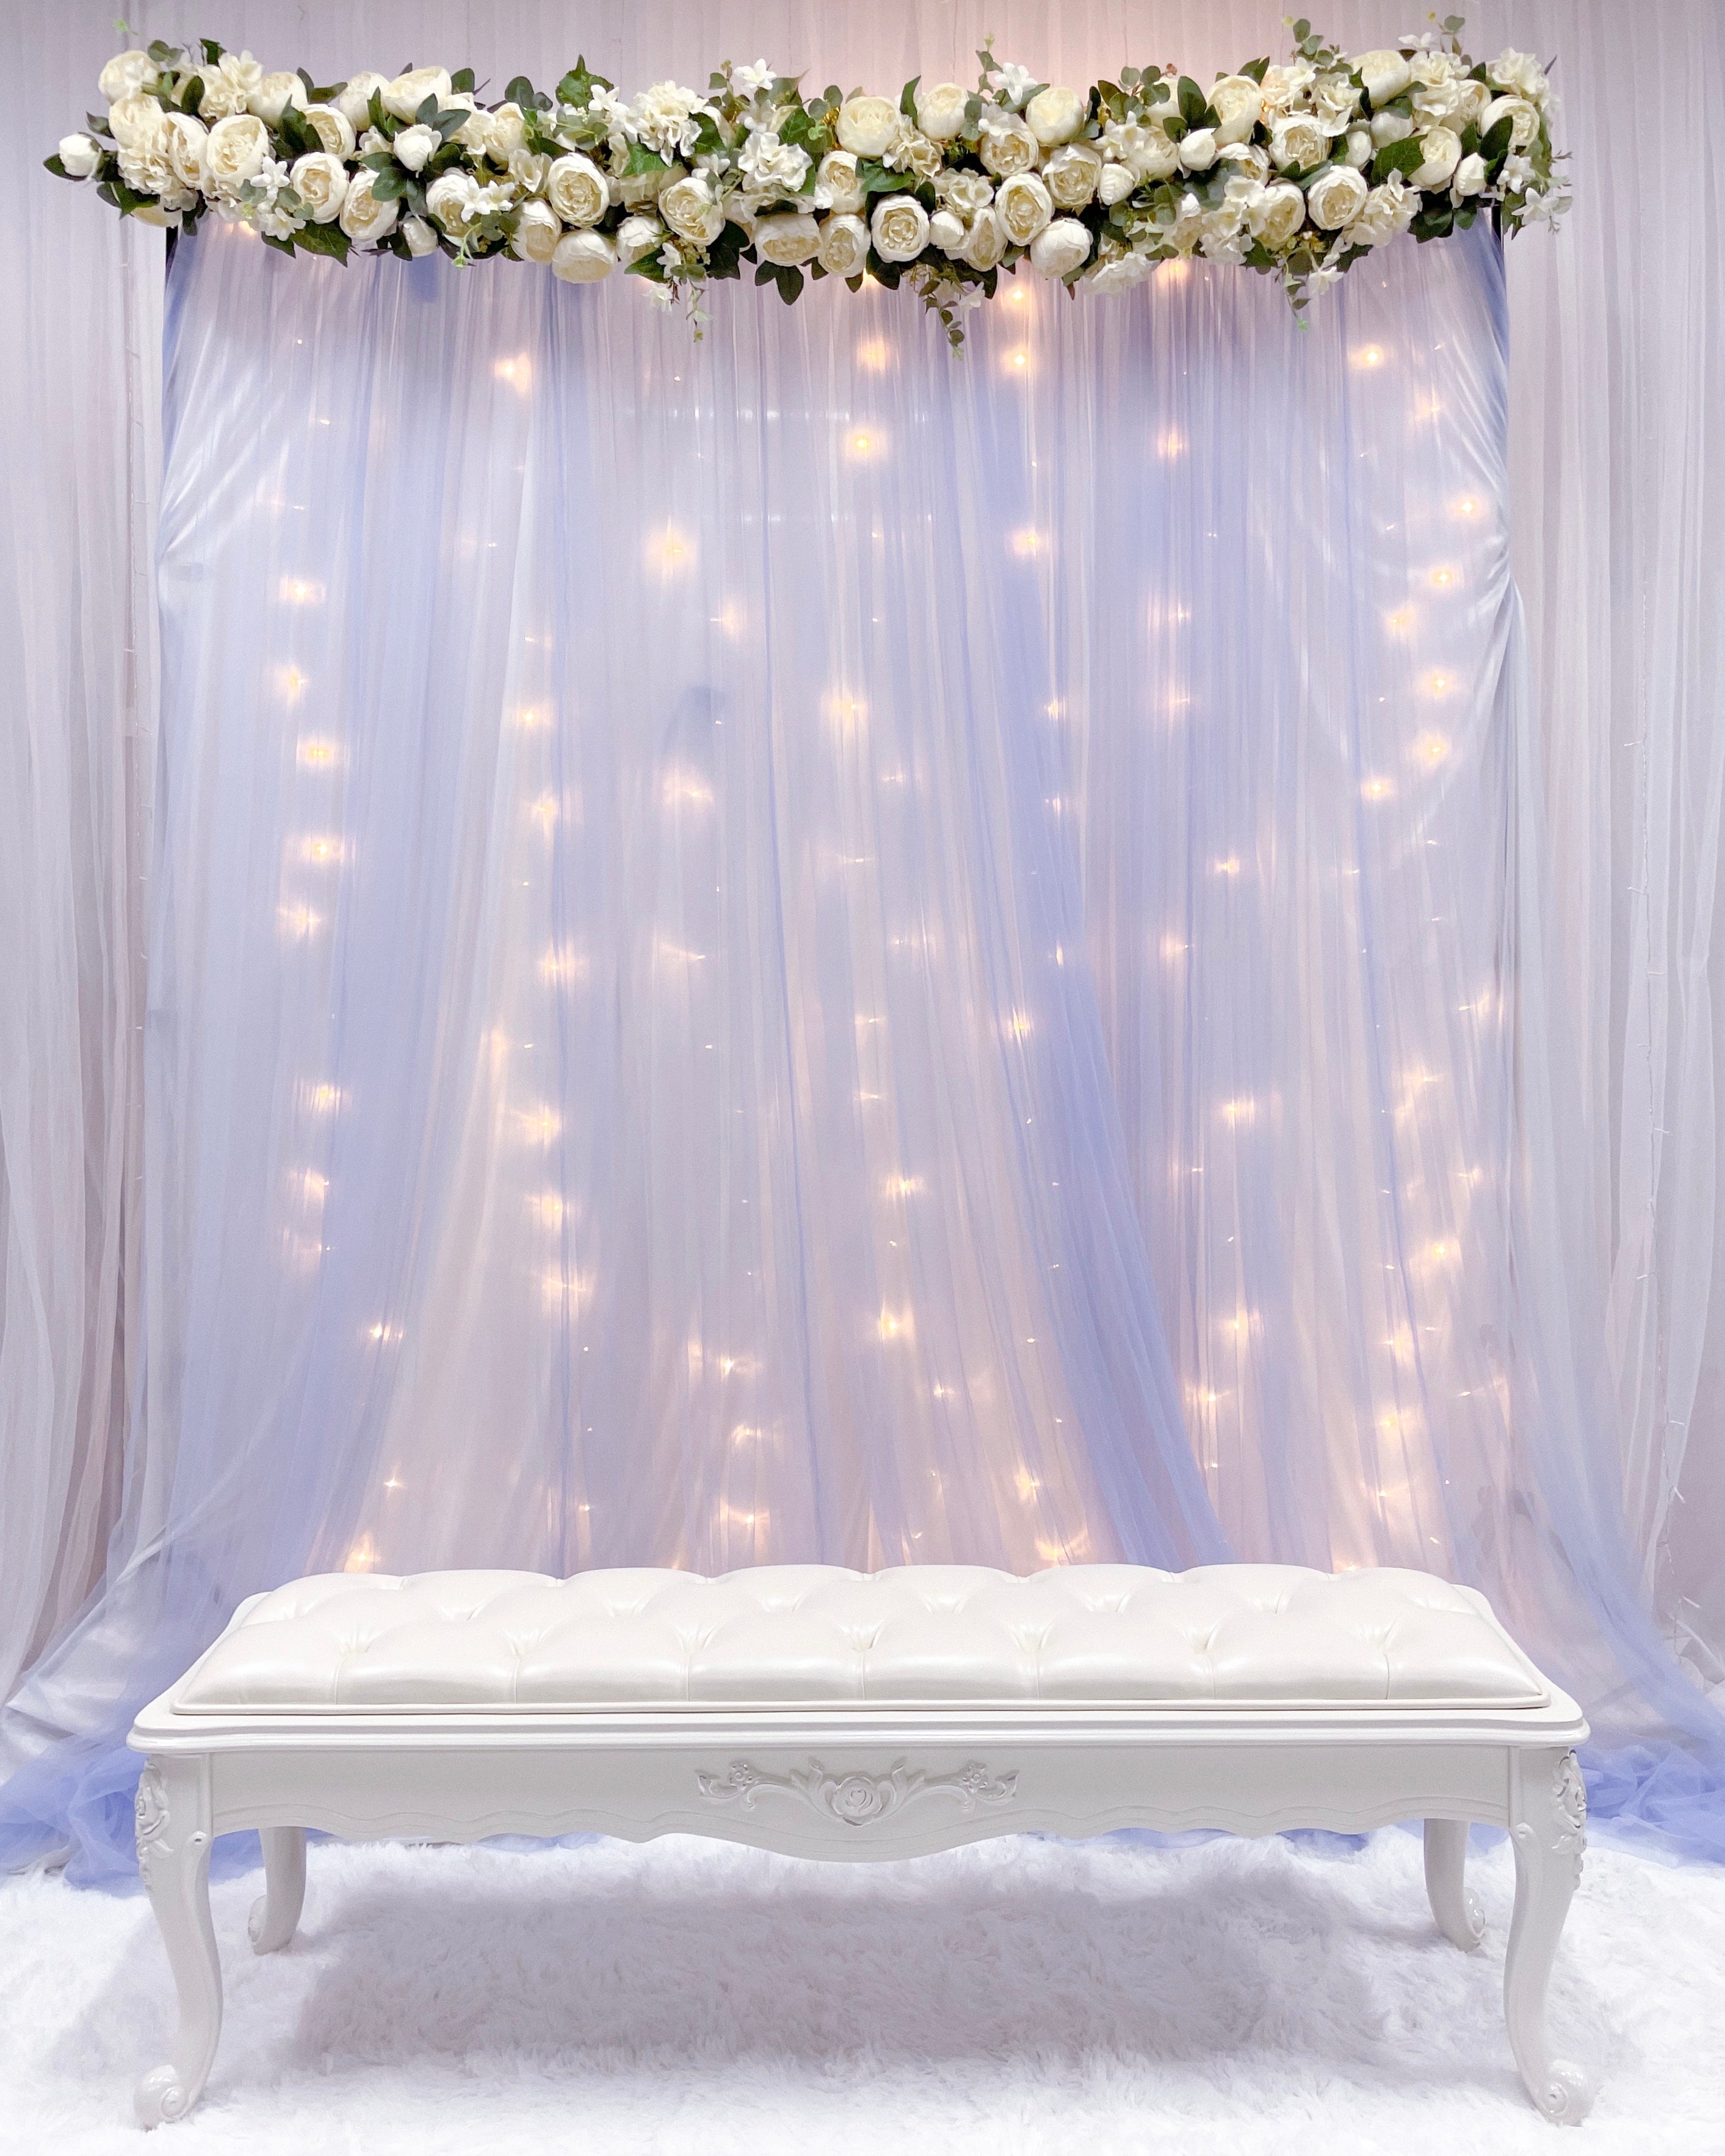 Mini Pelamin/ Mini Dias Decor for Malay Wedding at Home in Singapore - Blue & White Theme with Fairylights